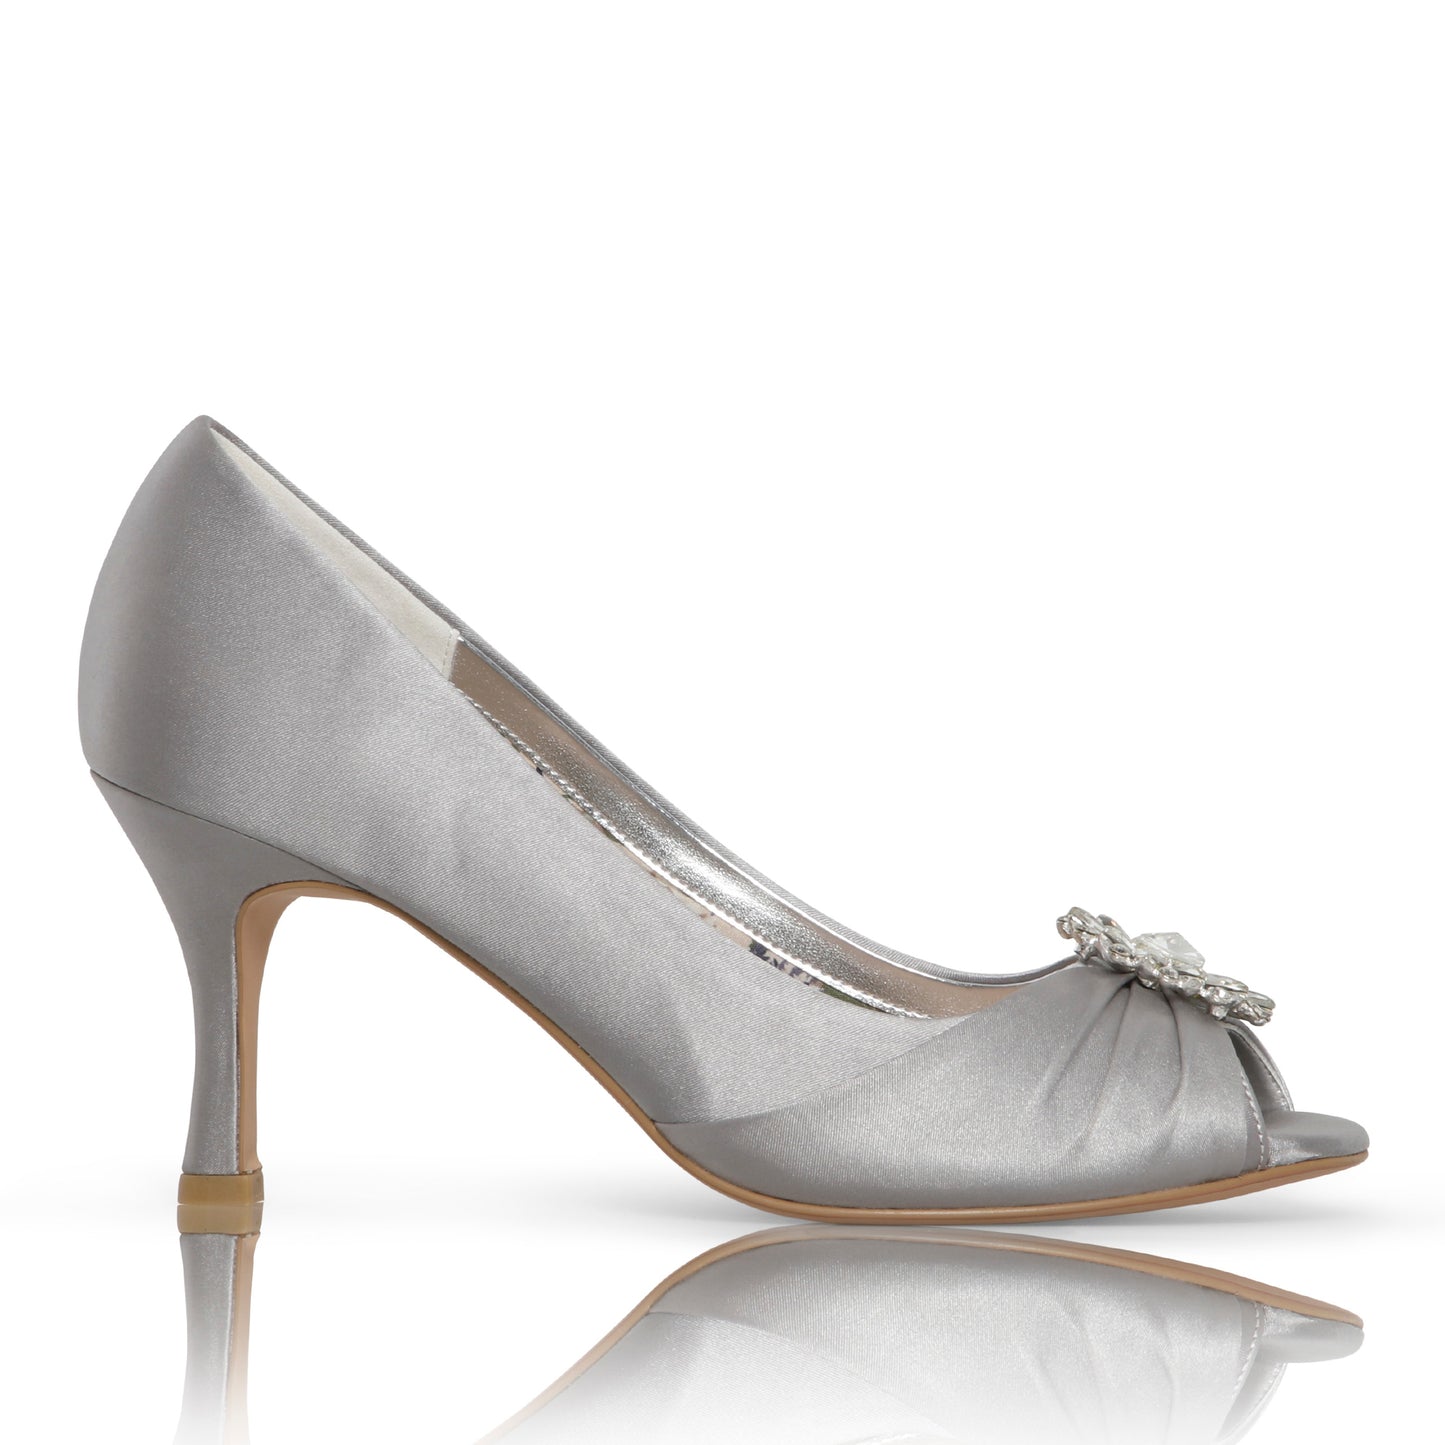 Gina silver peep toes with diamante trim